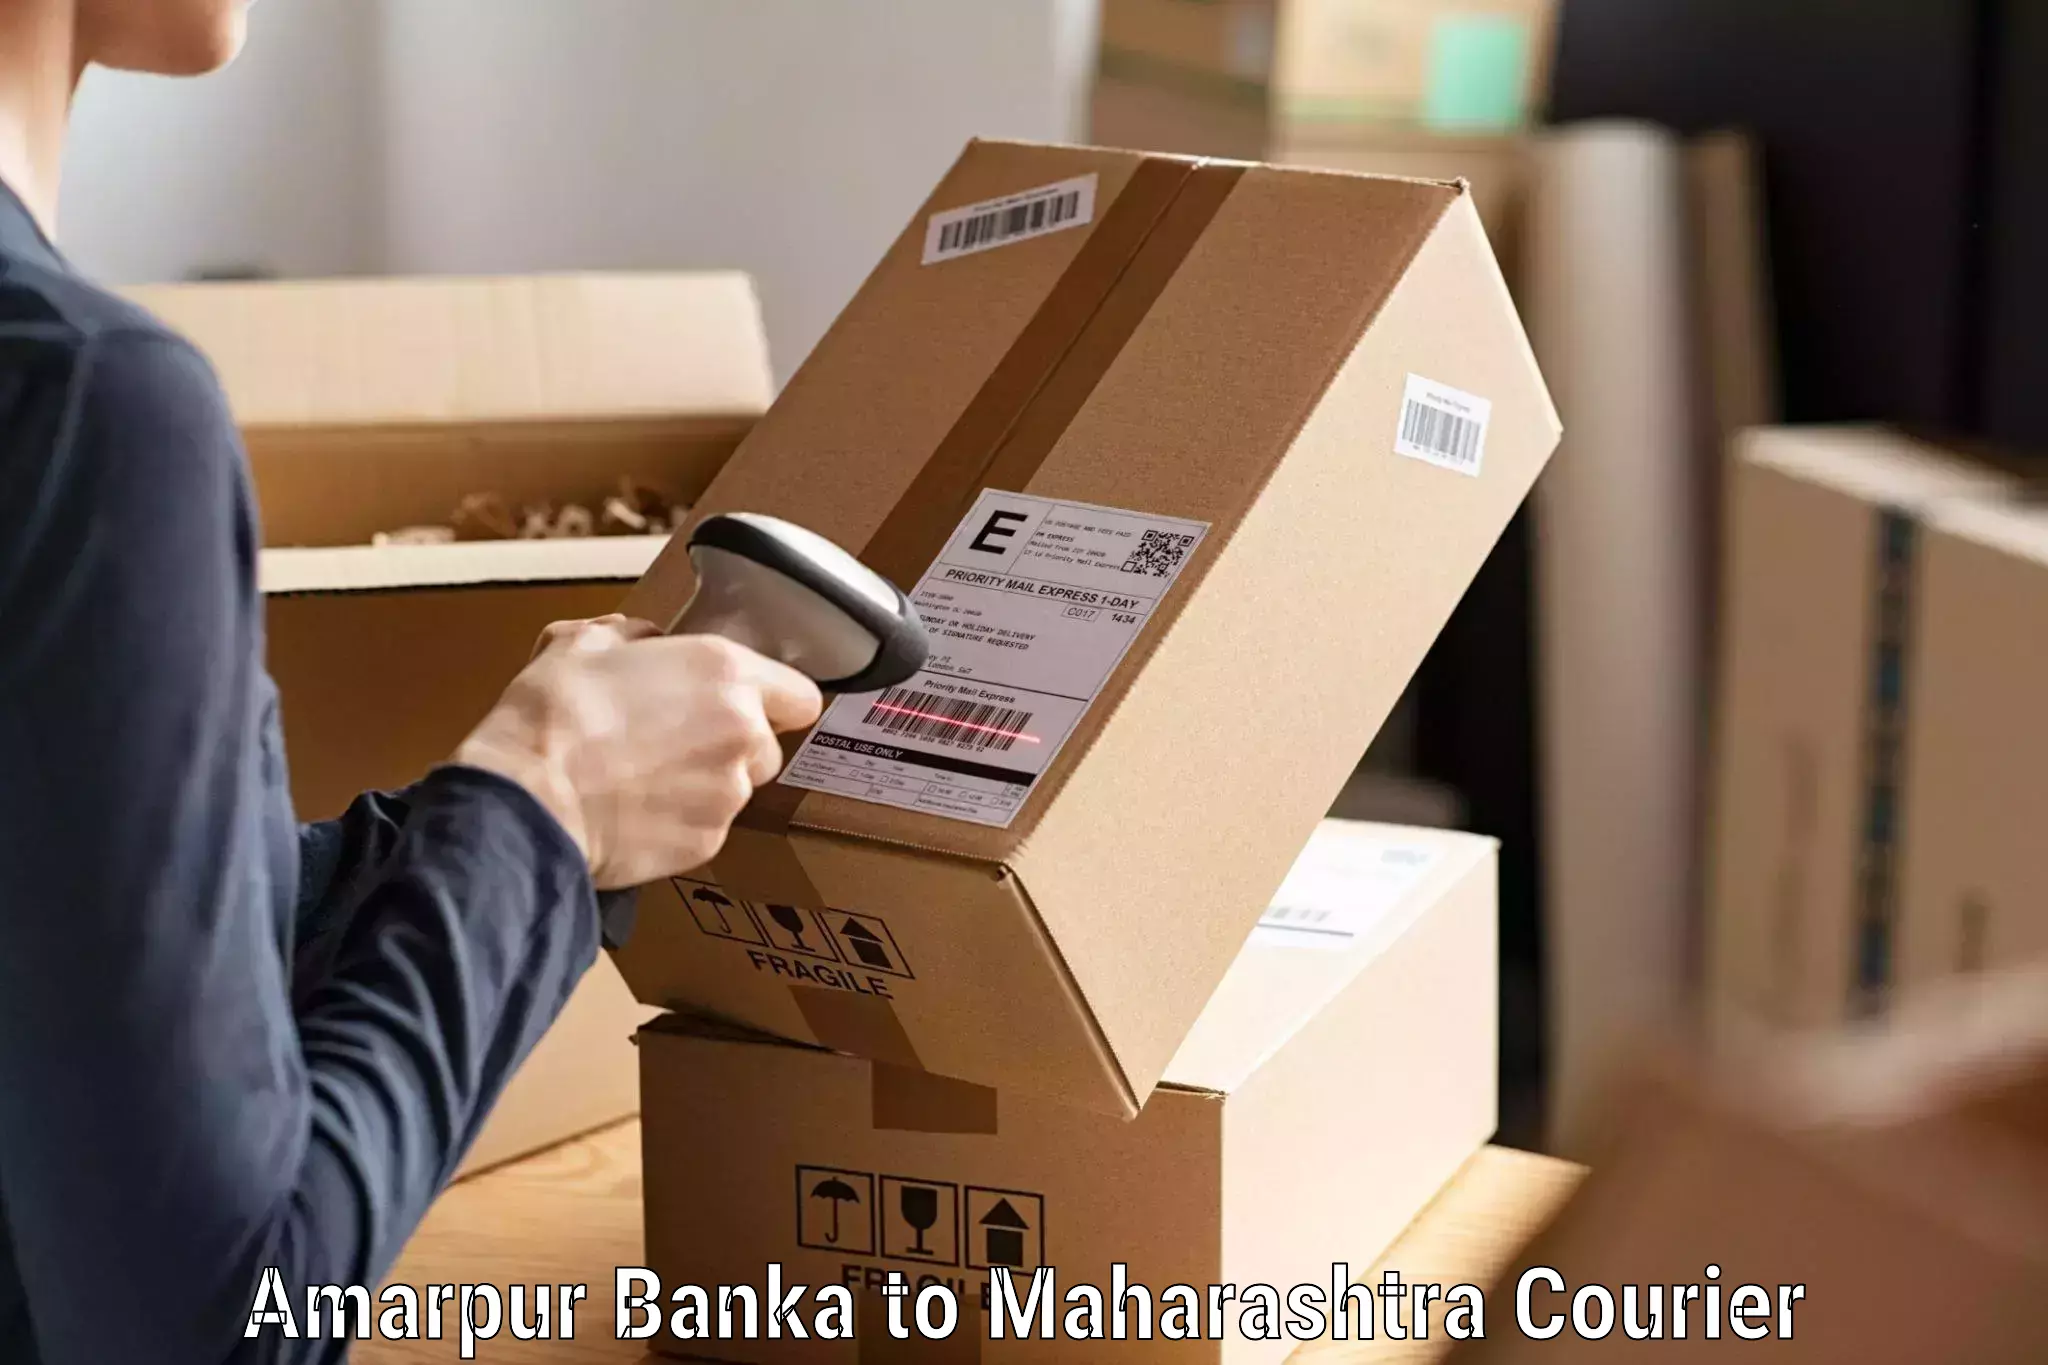 Business delivery service Amarpur Banka to Maharashtra